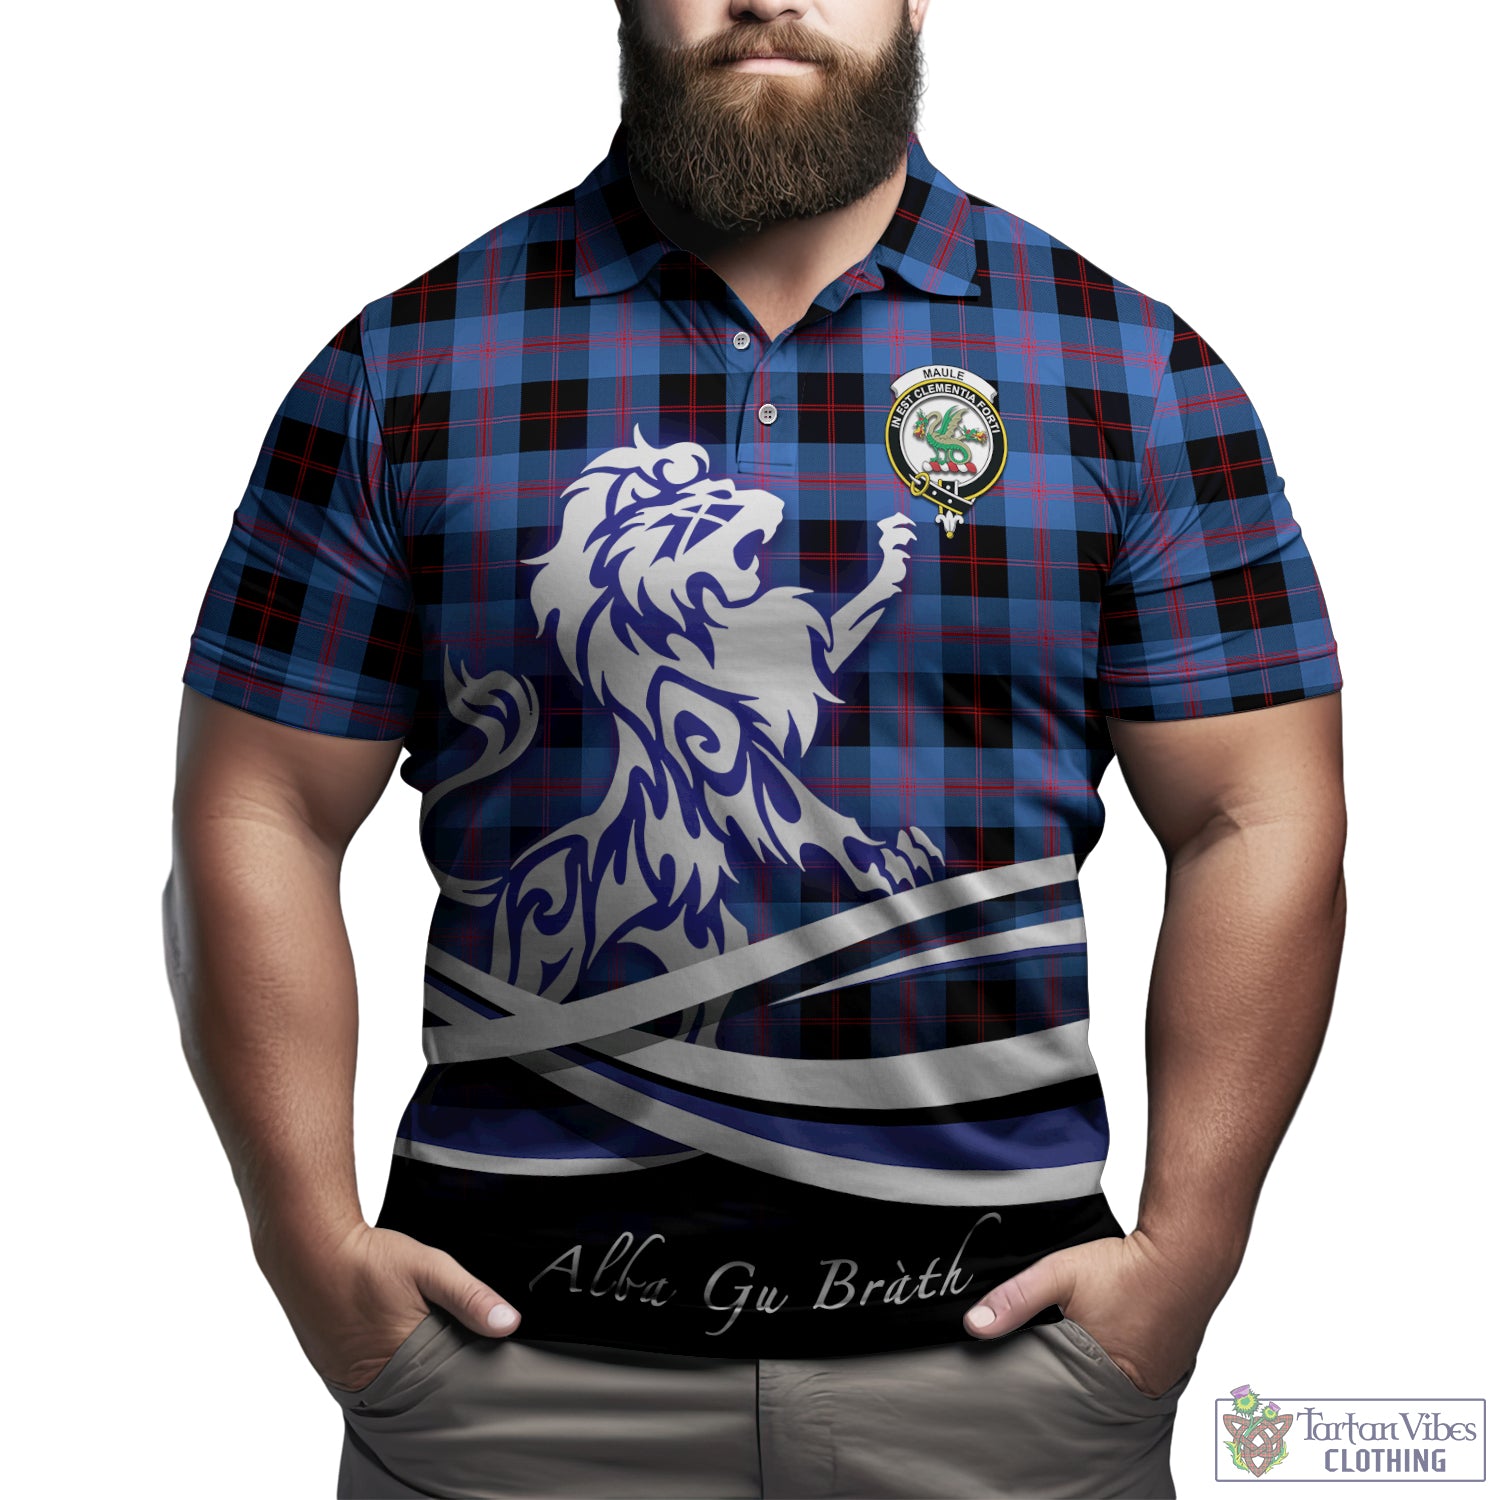 maule-tartan-polo-shirt-with-alba-gu-brath-regal-lion-emblem